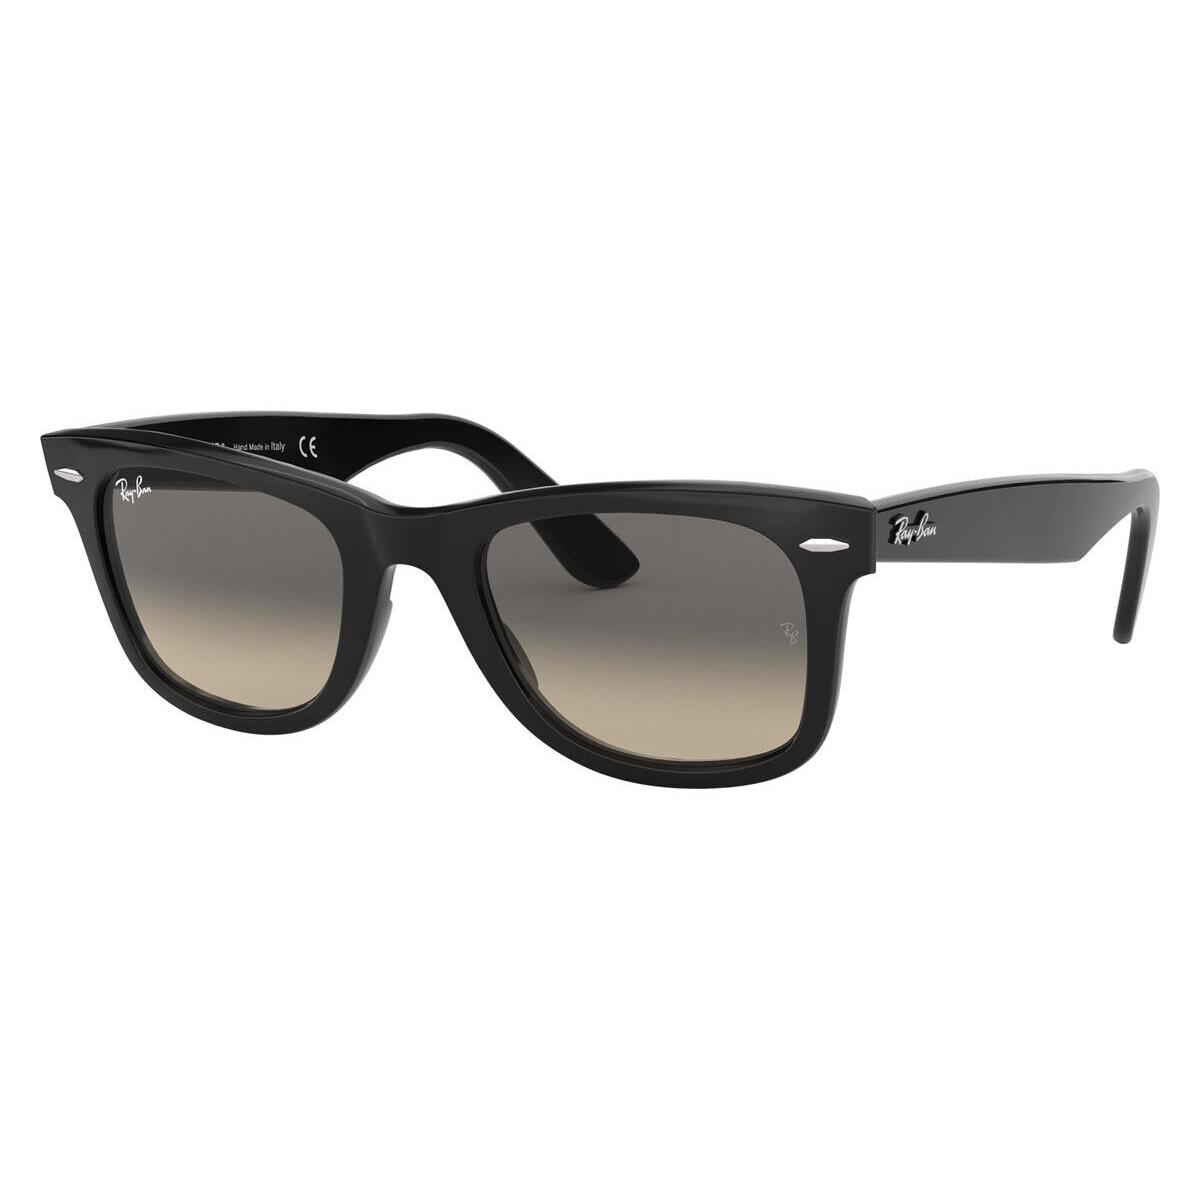 Ray-ban RB2140 Sunglasses Black Crystal Gray Gradient 50mm